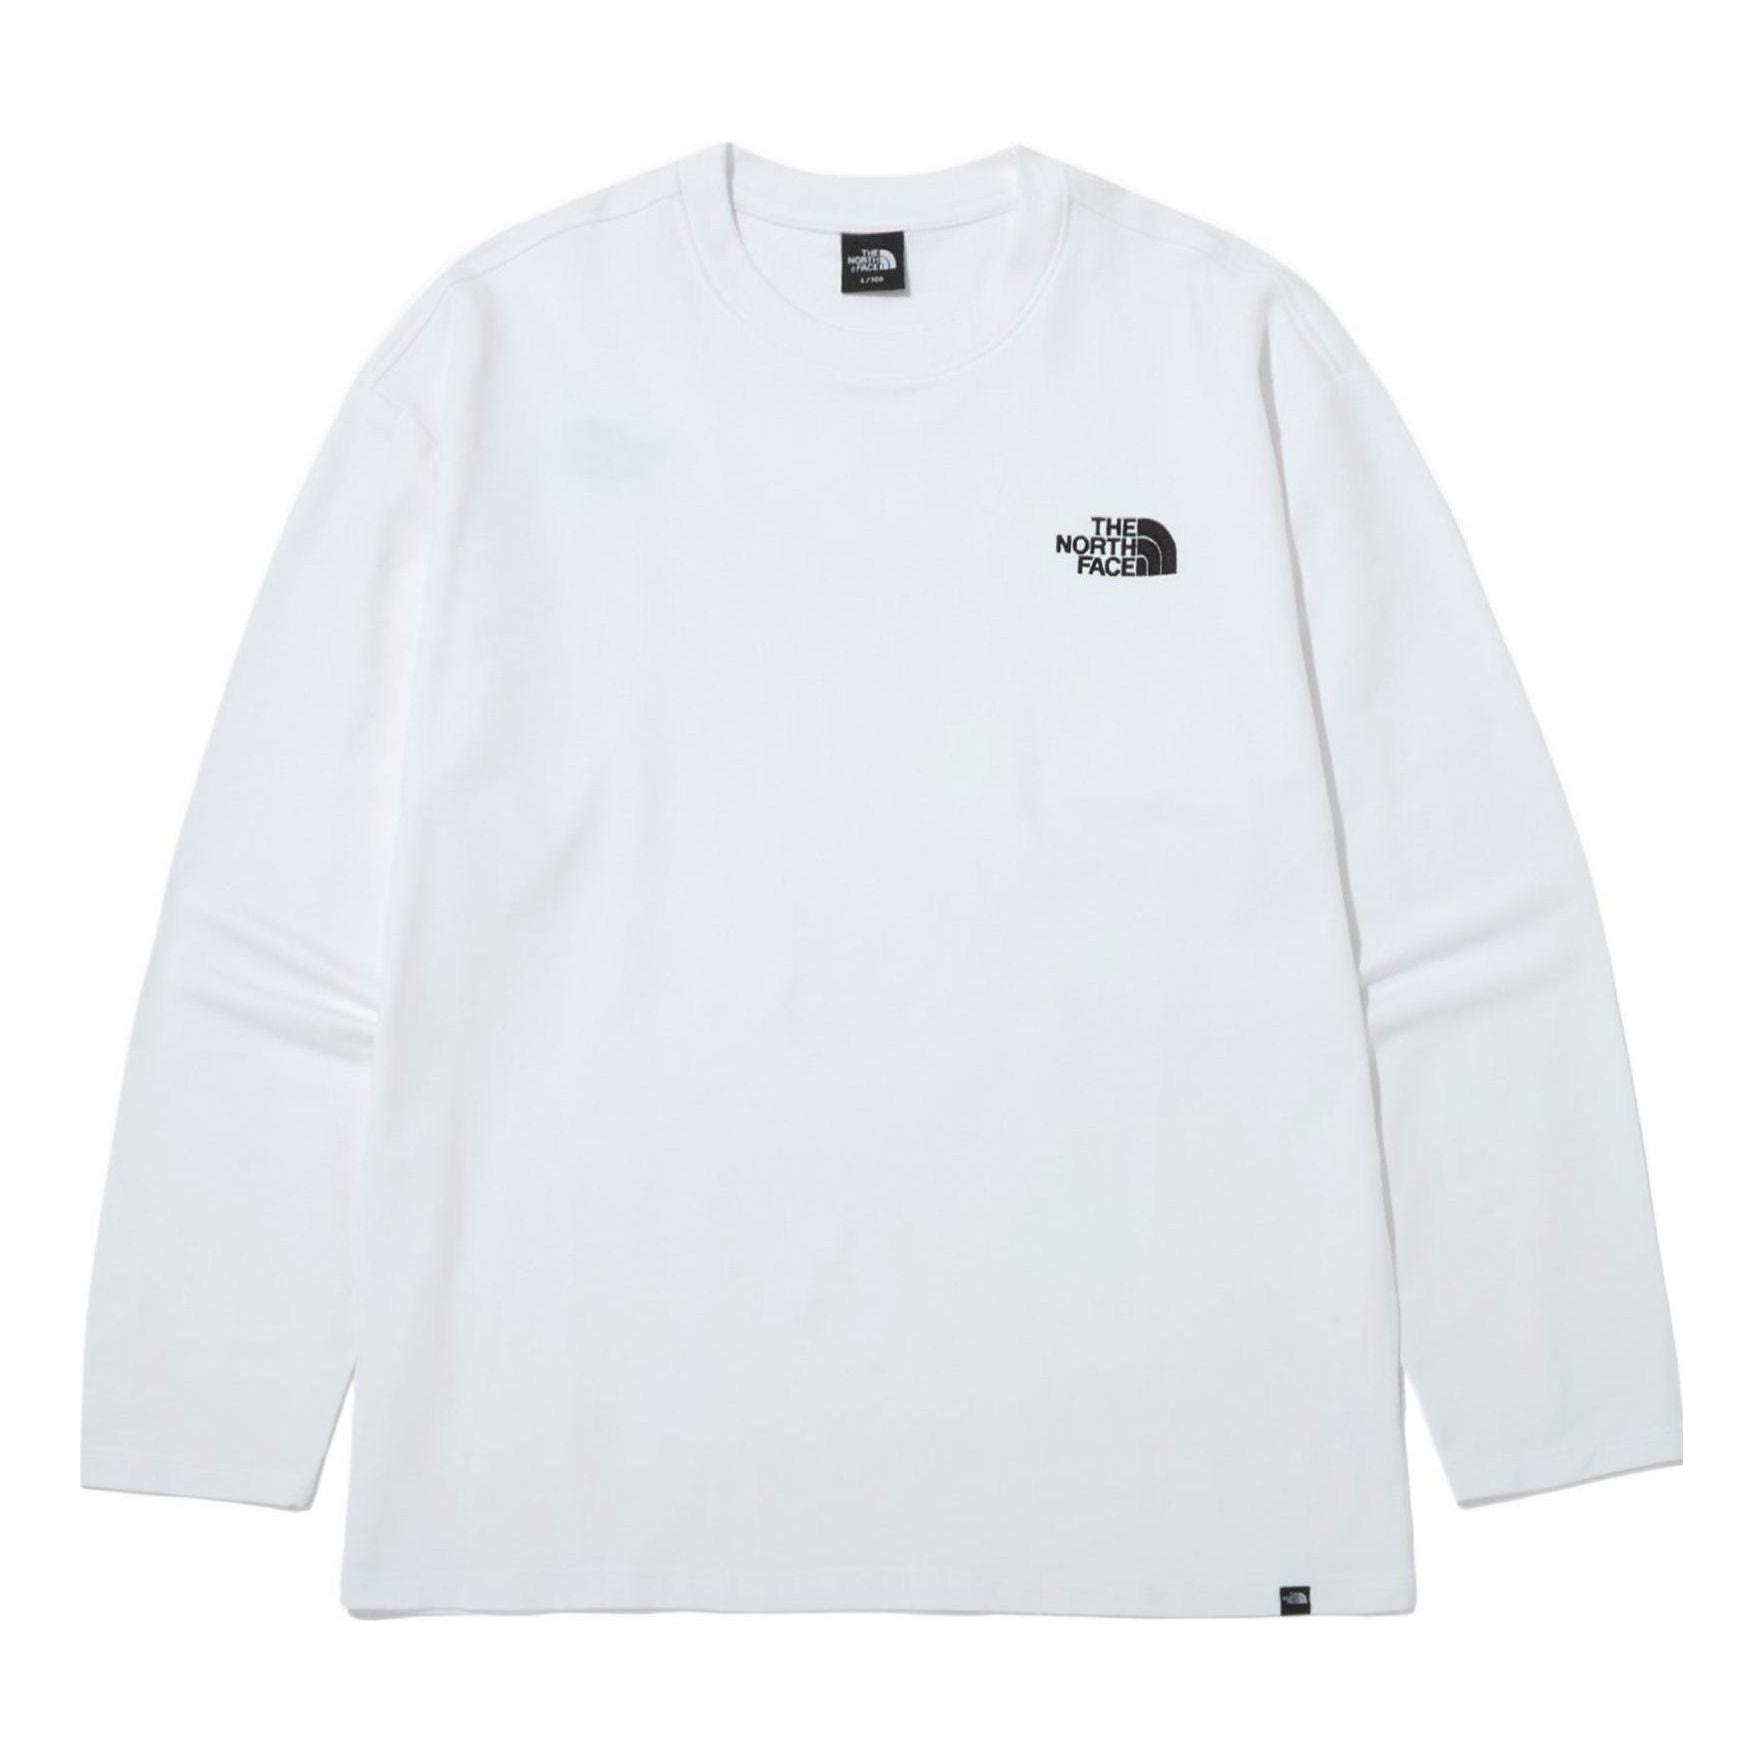 THE NORTH FACE Long Sleeve T-Shirt 'White' NT7TN90B - 1